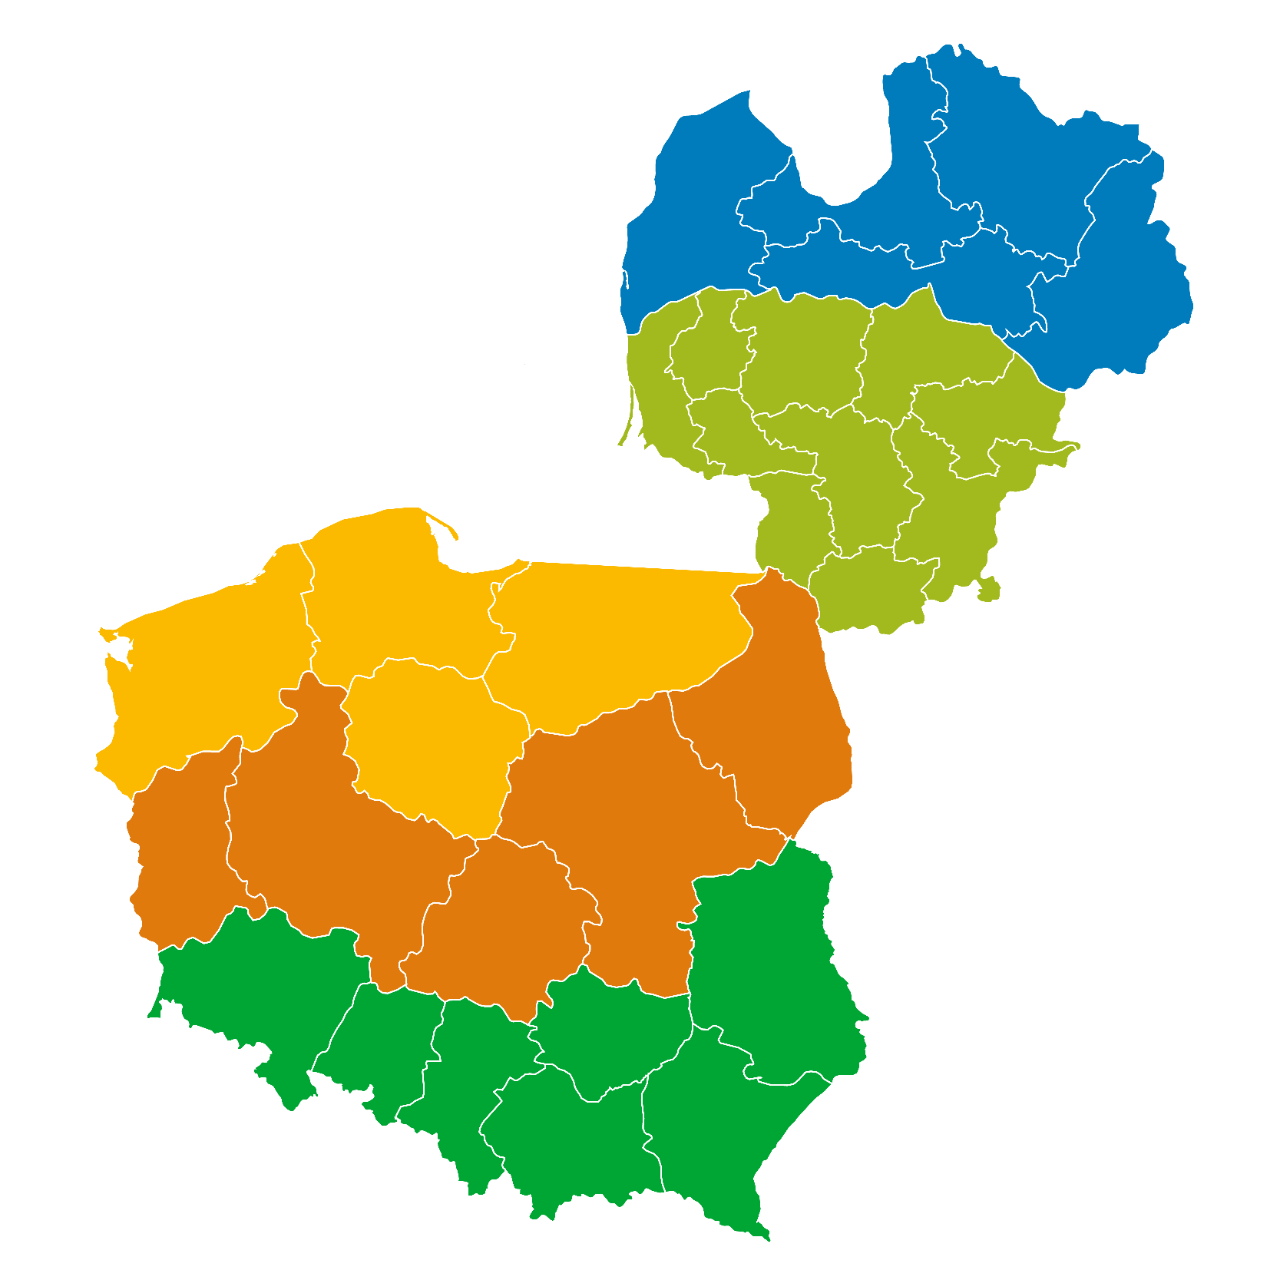 Poland Lithuania and Latvia